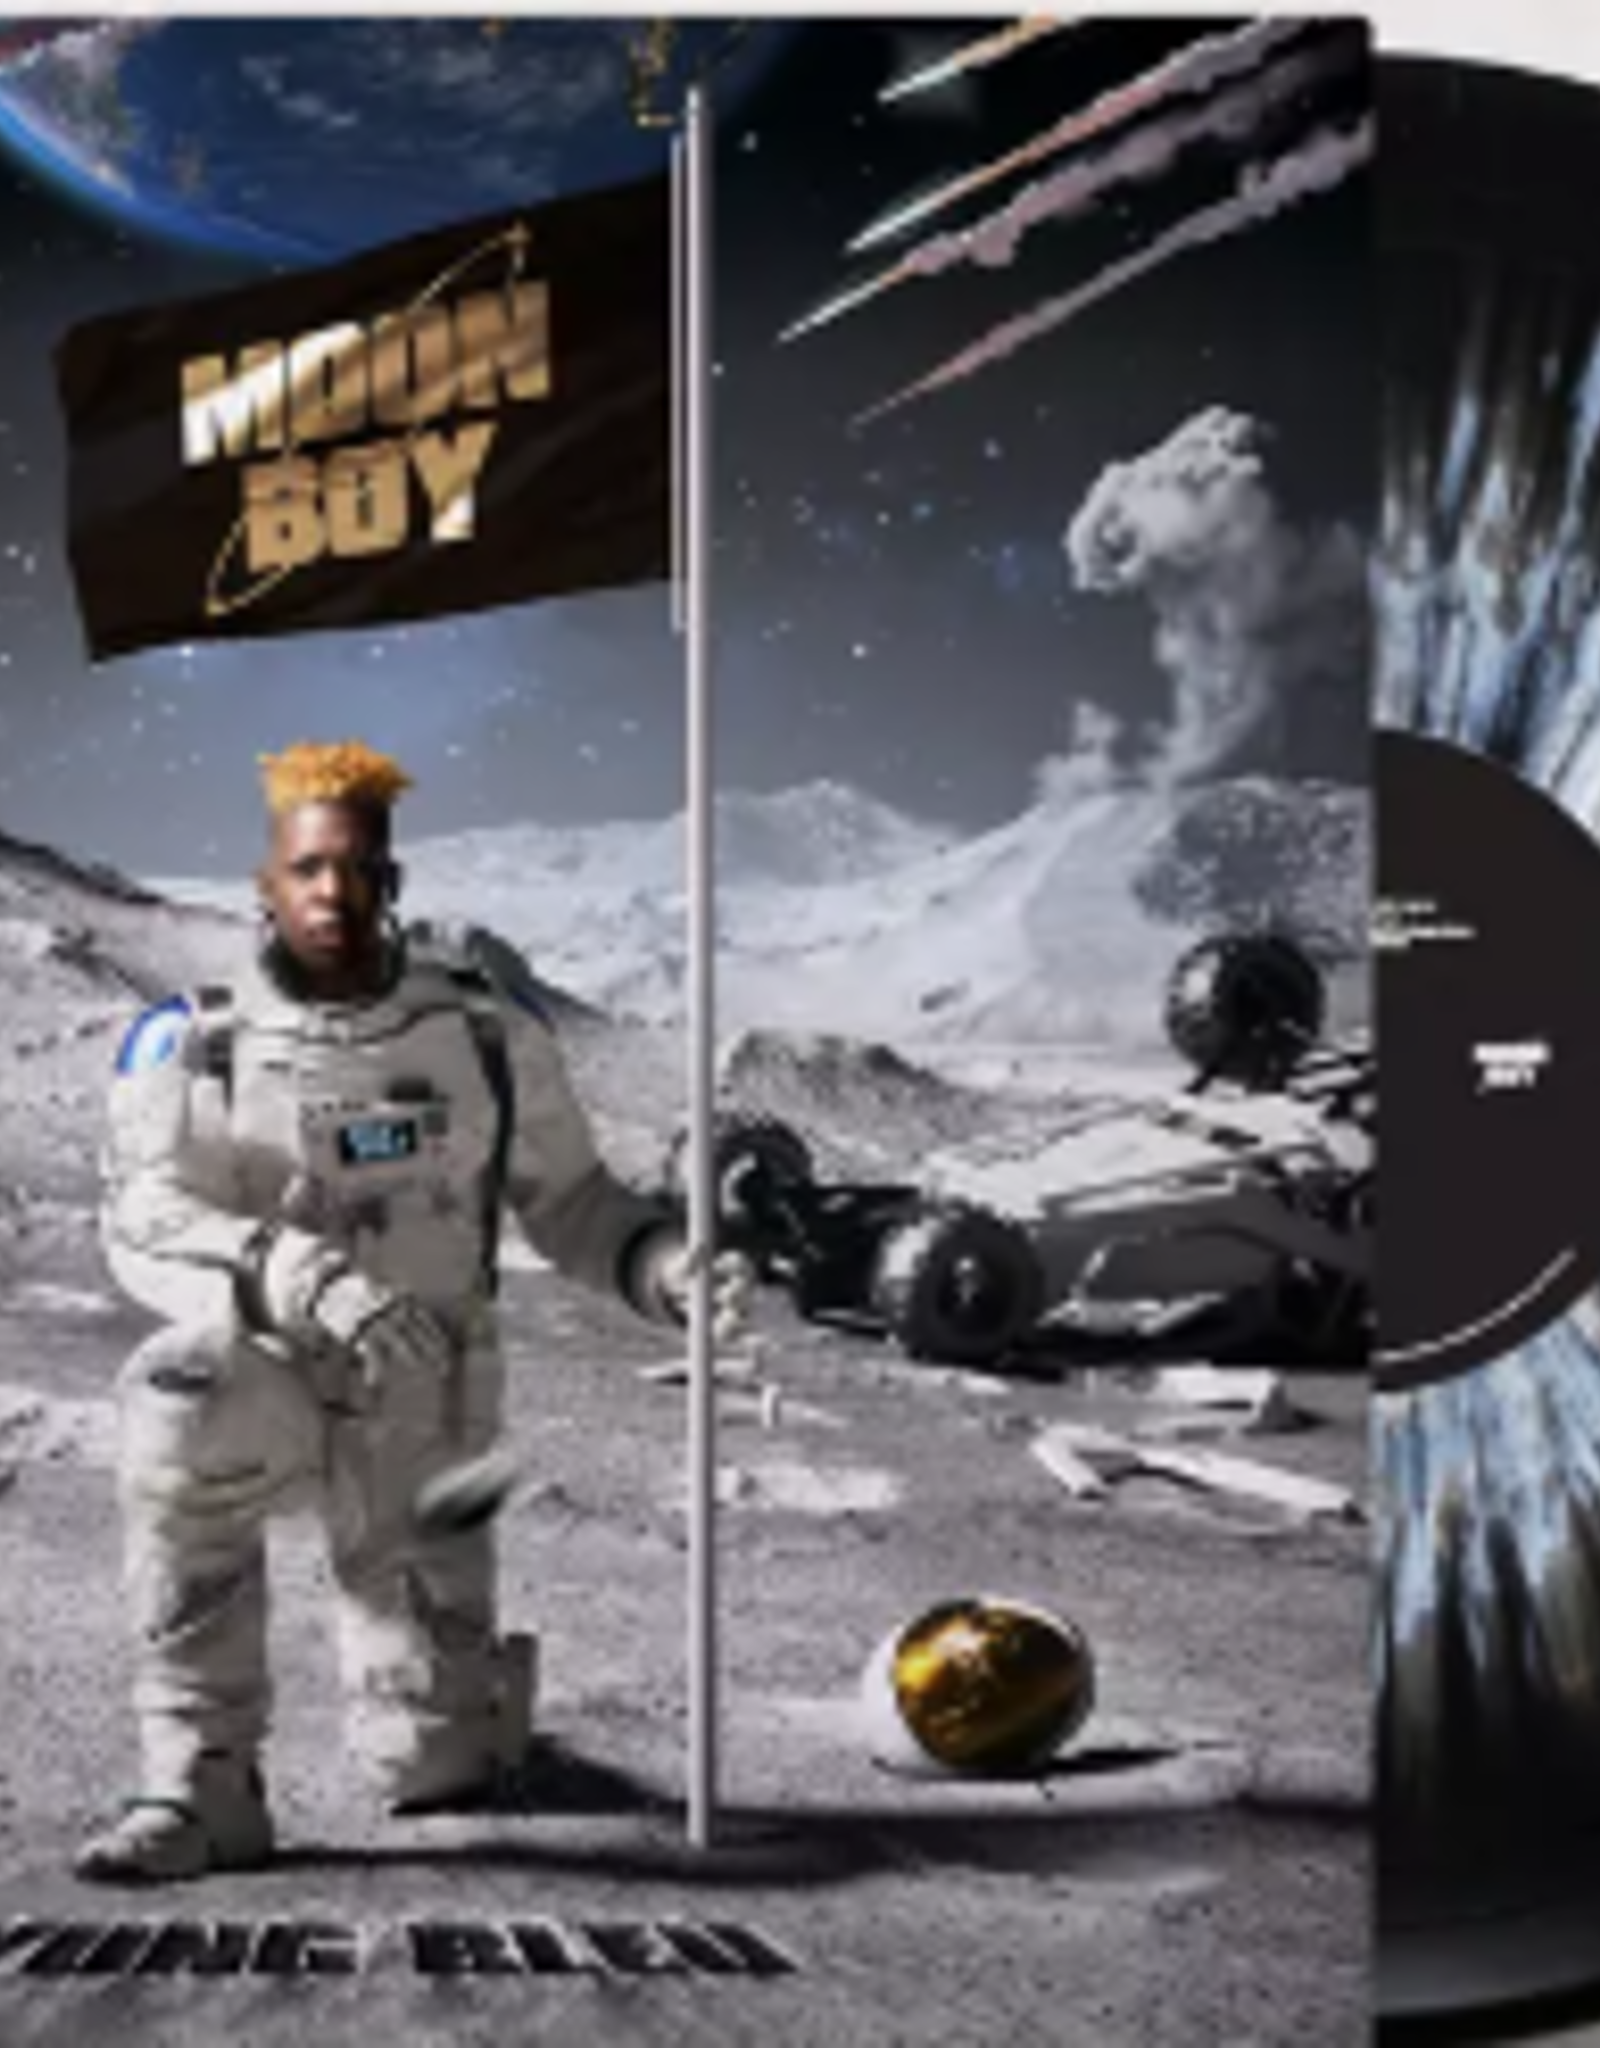 Yung Bleu - Moon Boy (Space & Stars Spatter Vinyl)